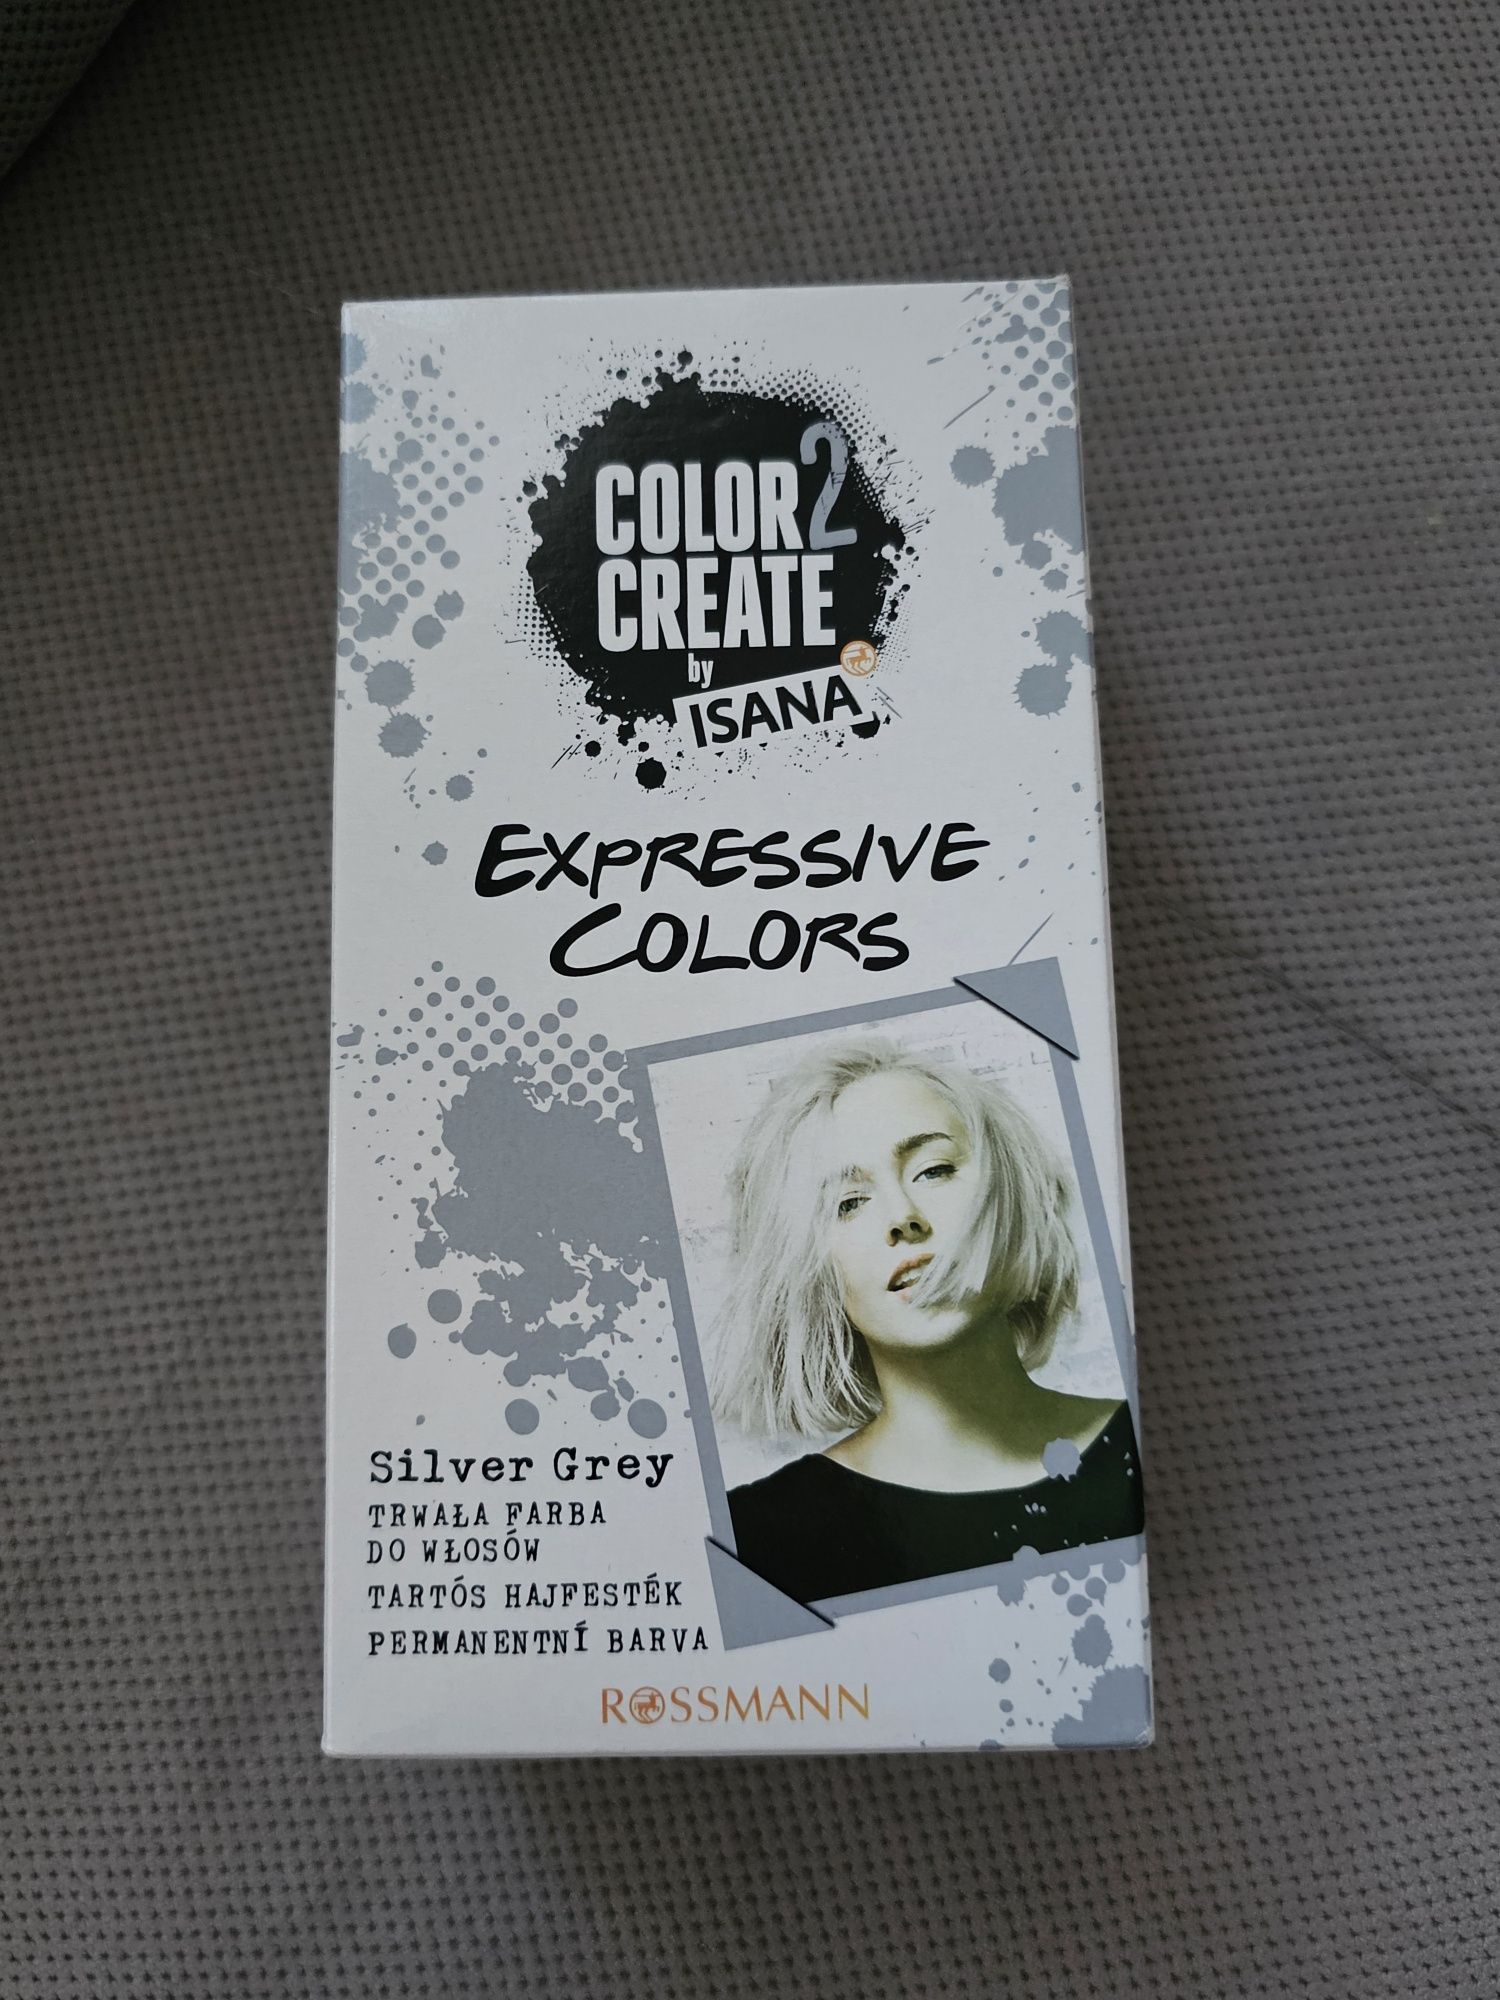 ISANA COLOR 2 CREATE Expressive Colors farba do włosów Silver Grey